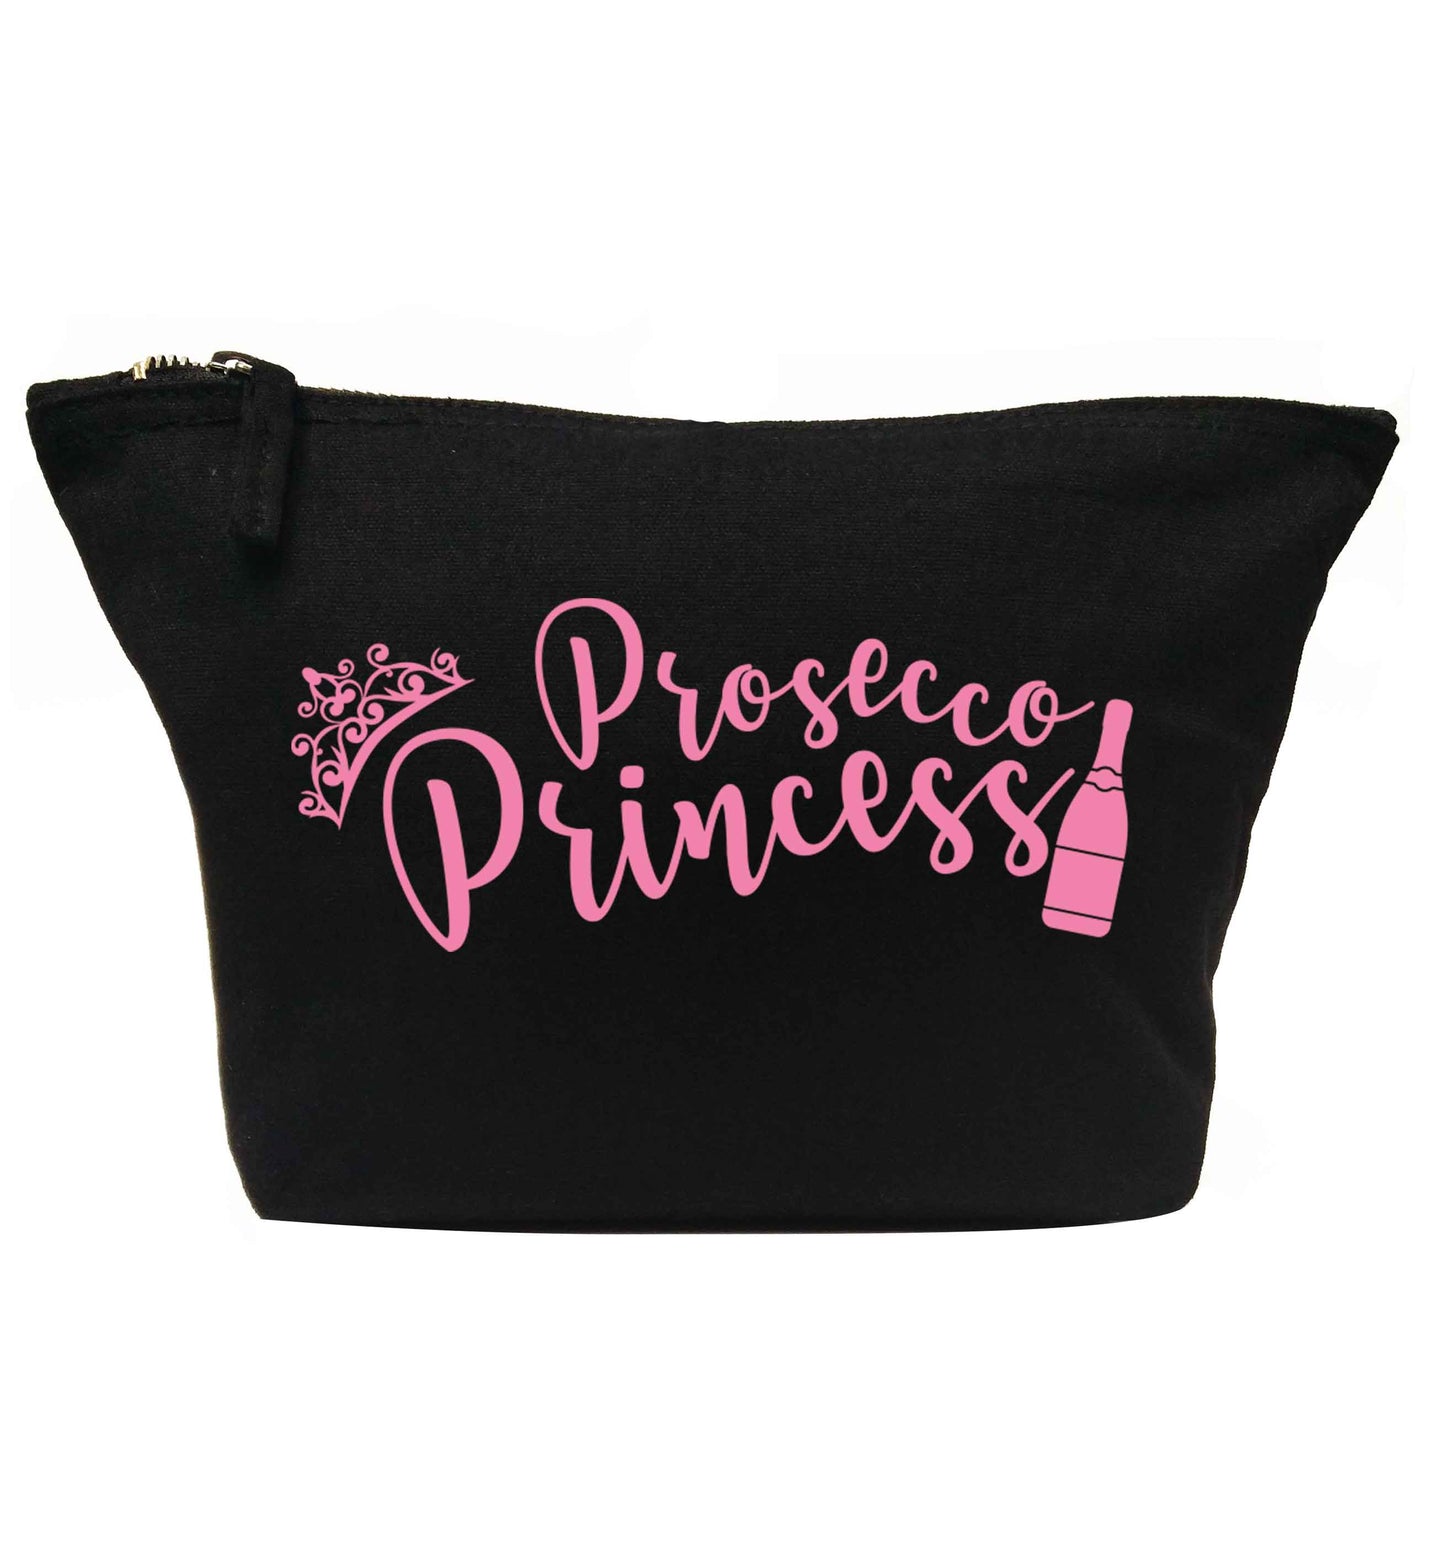 Prosecco princess | makeup / wash bag